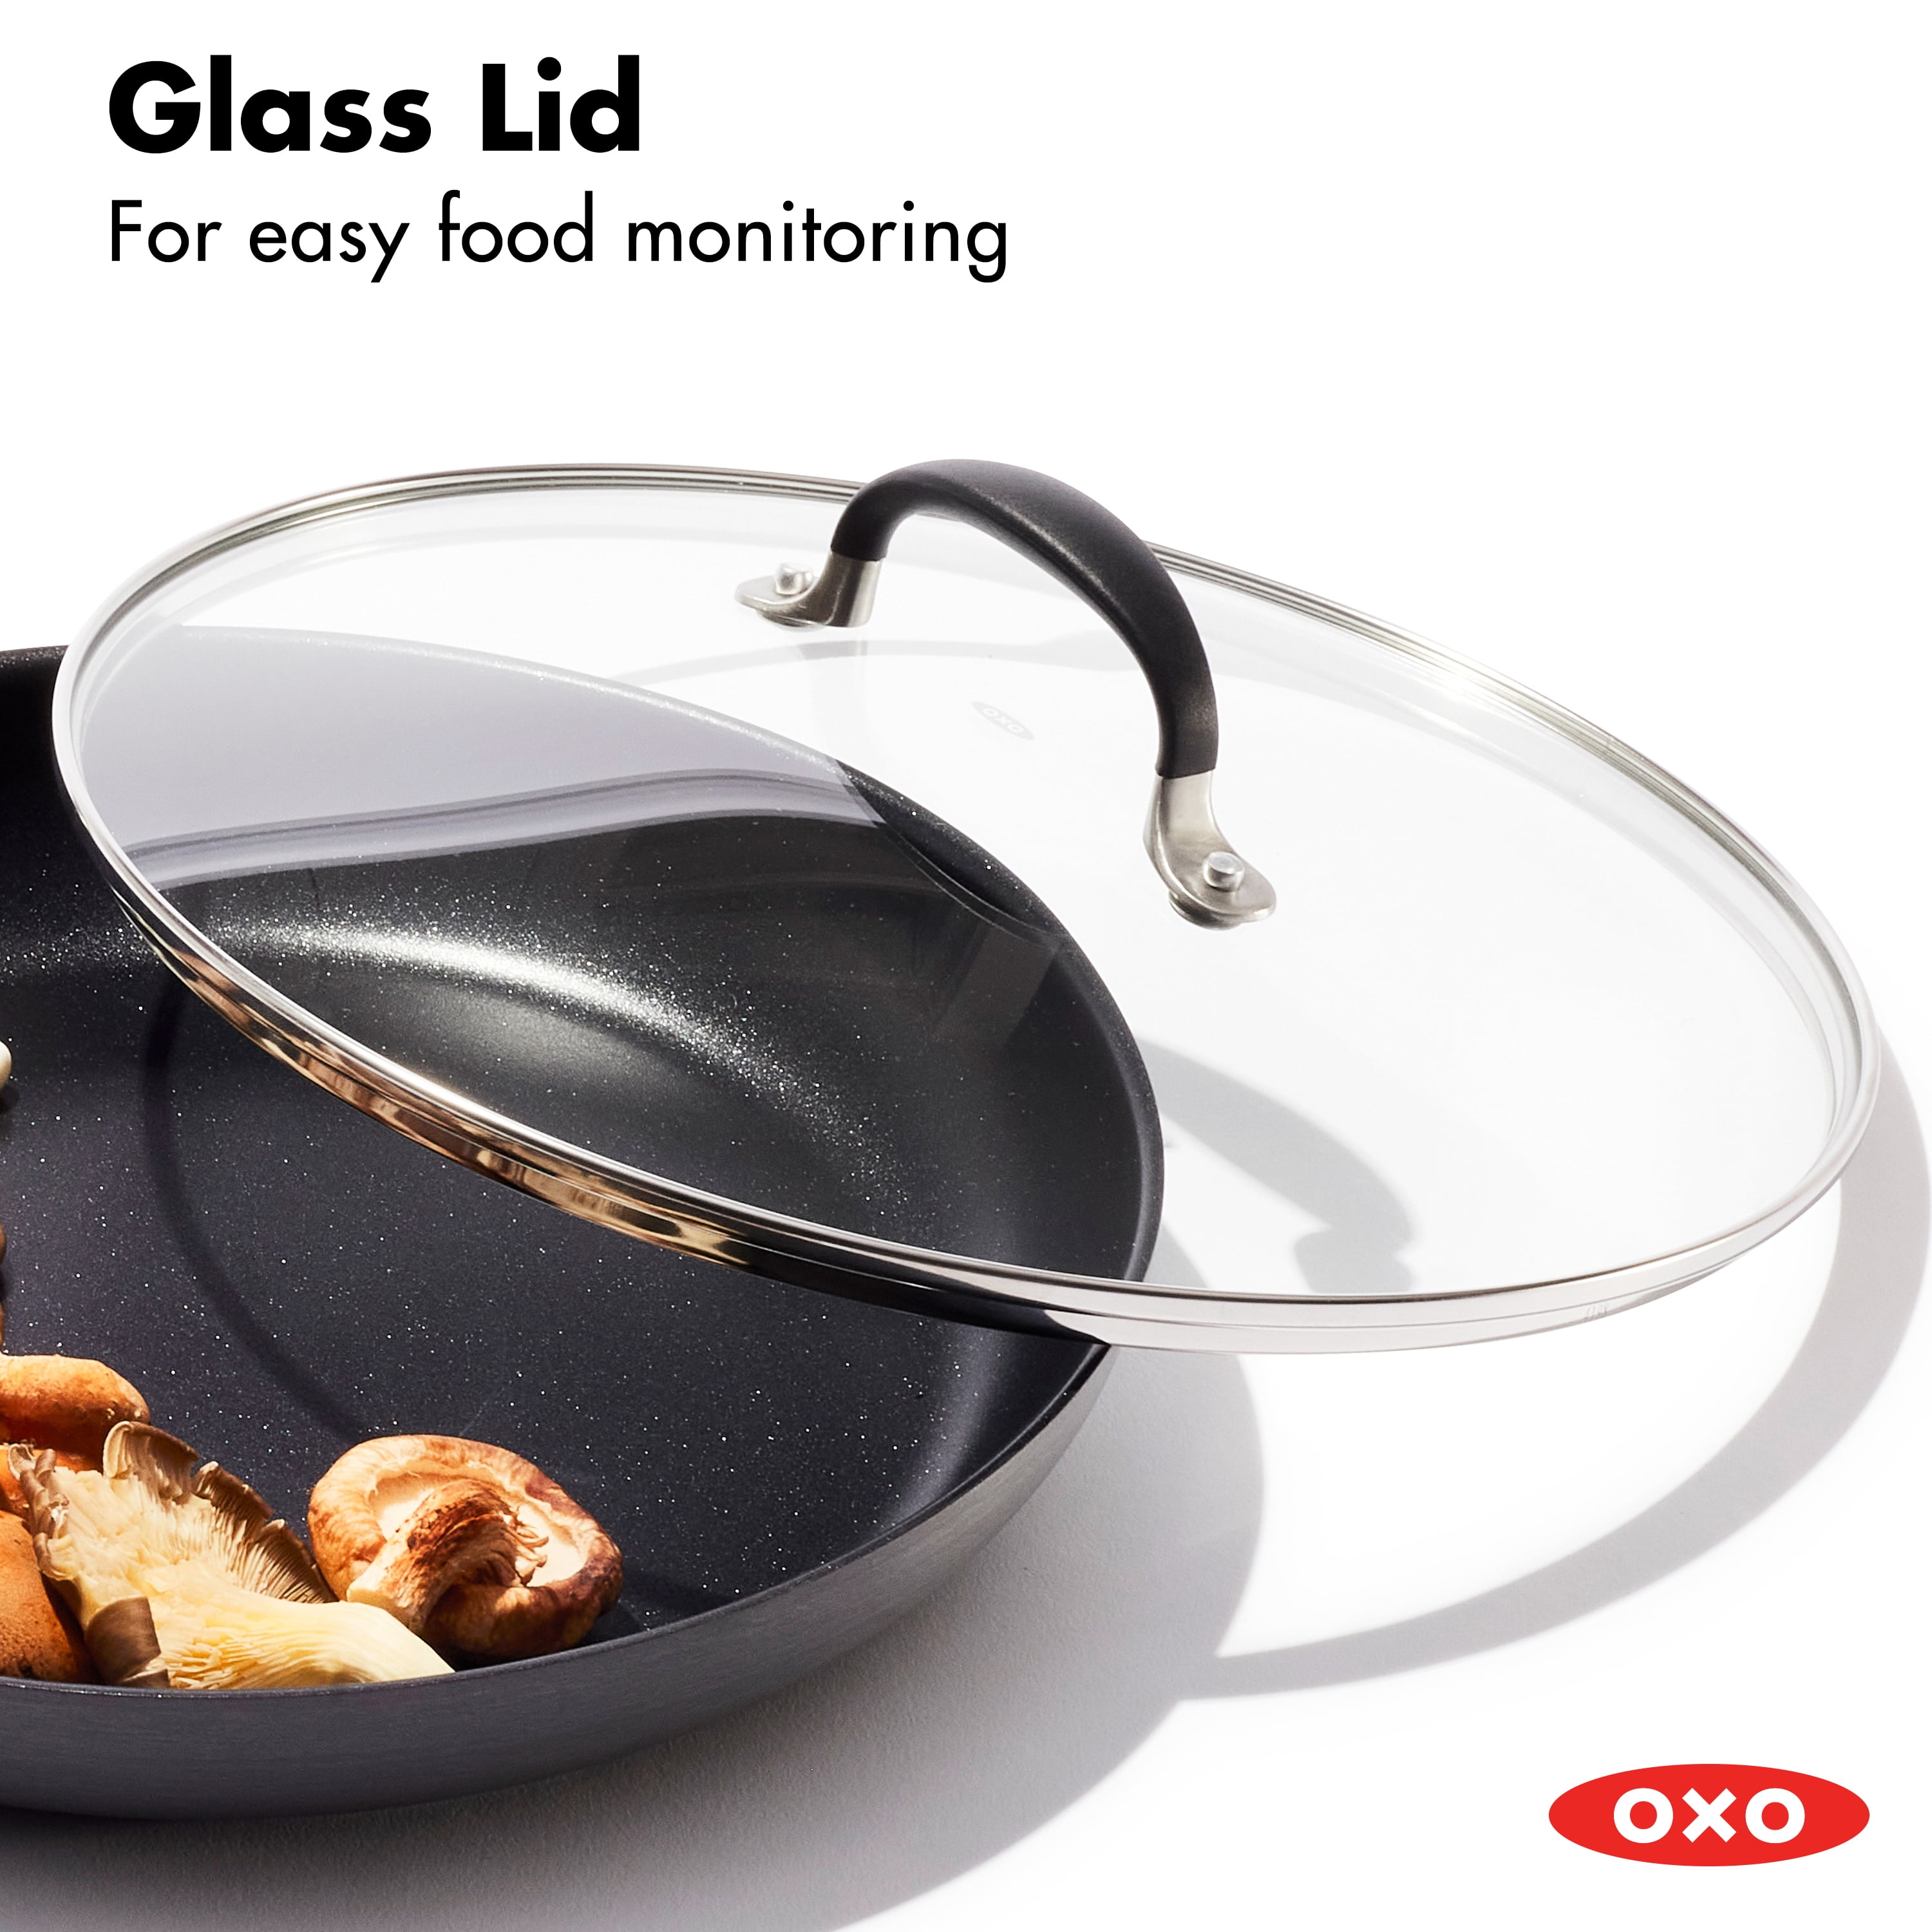 OXO Good Grips Hard Anodized Nonstick 12-Inch Fry Pan - Loft410